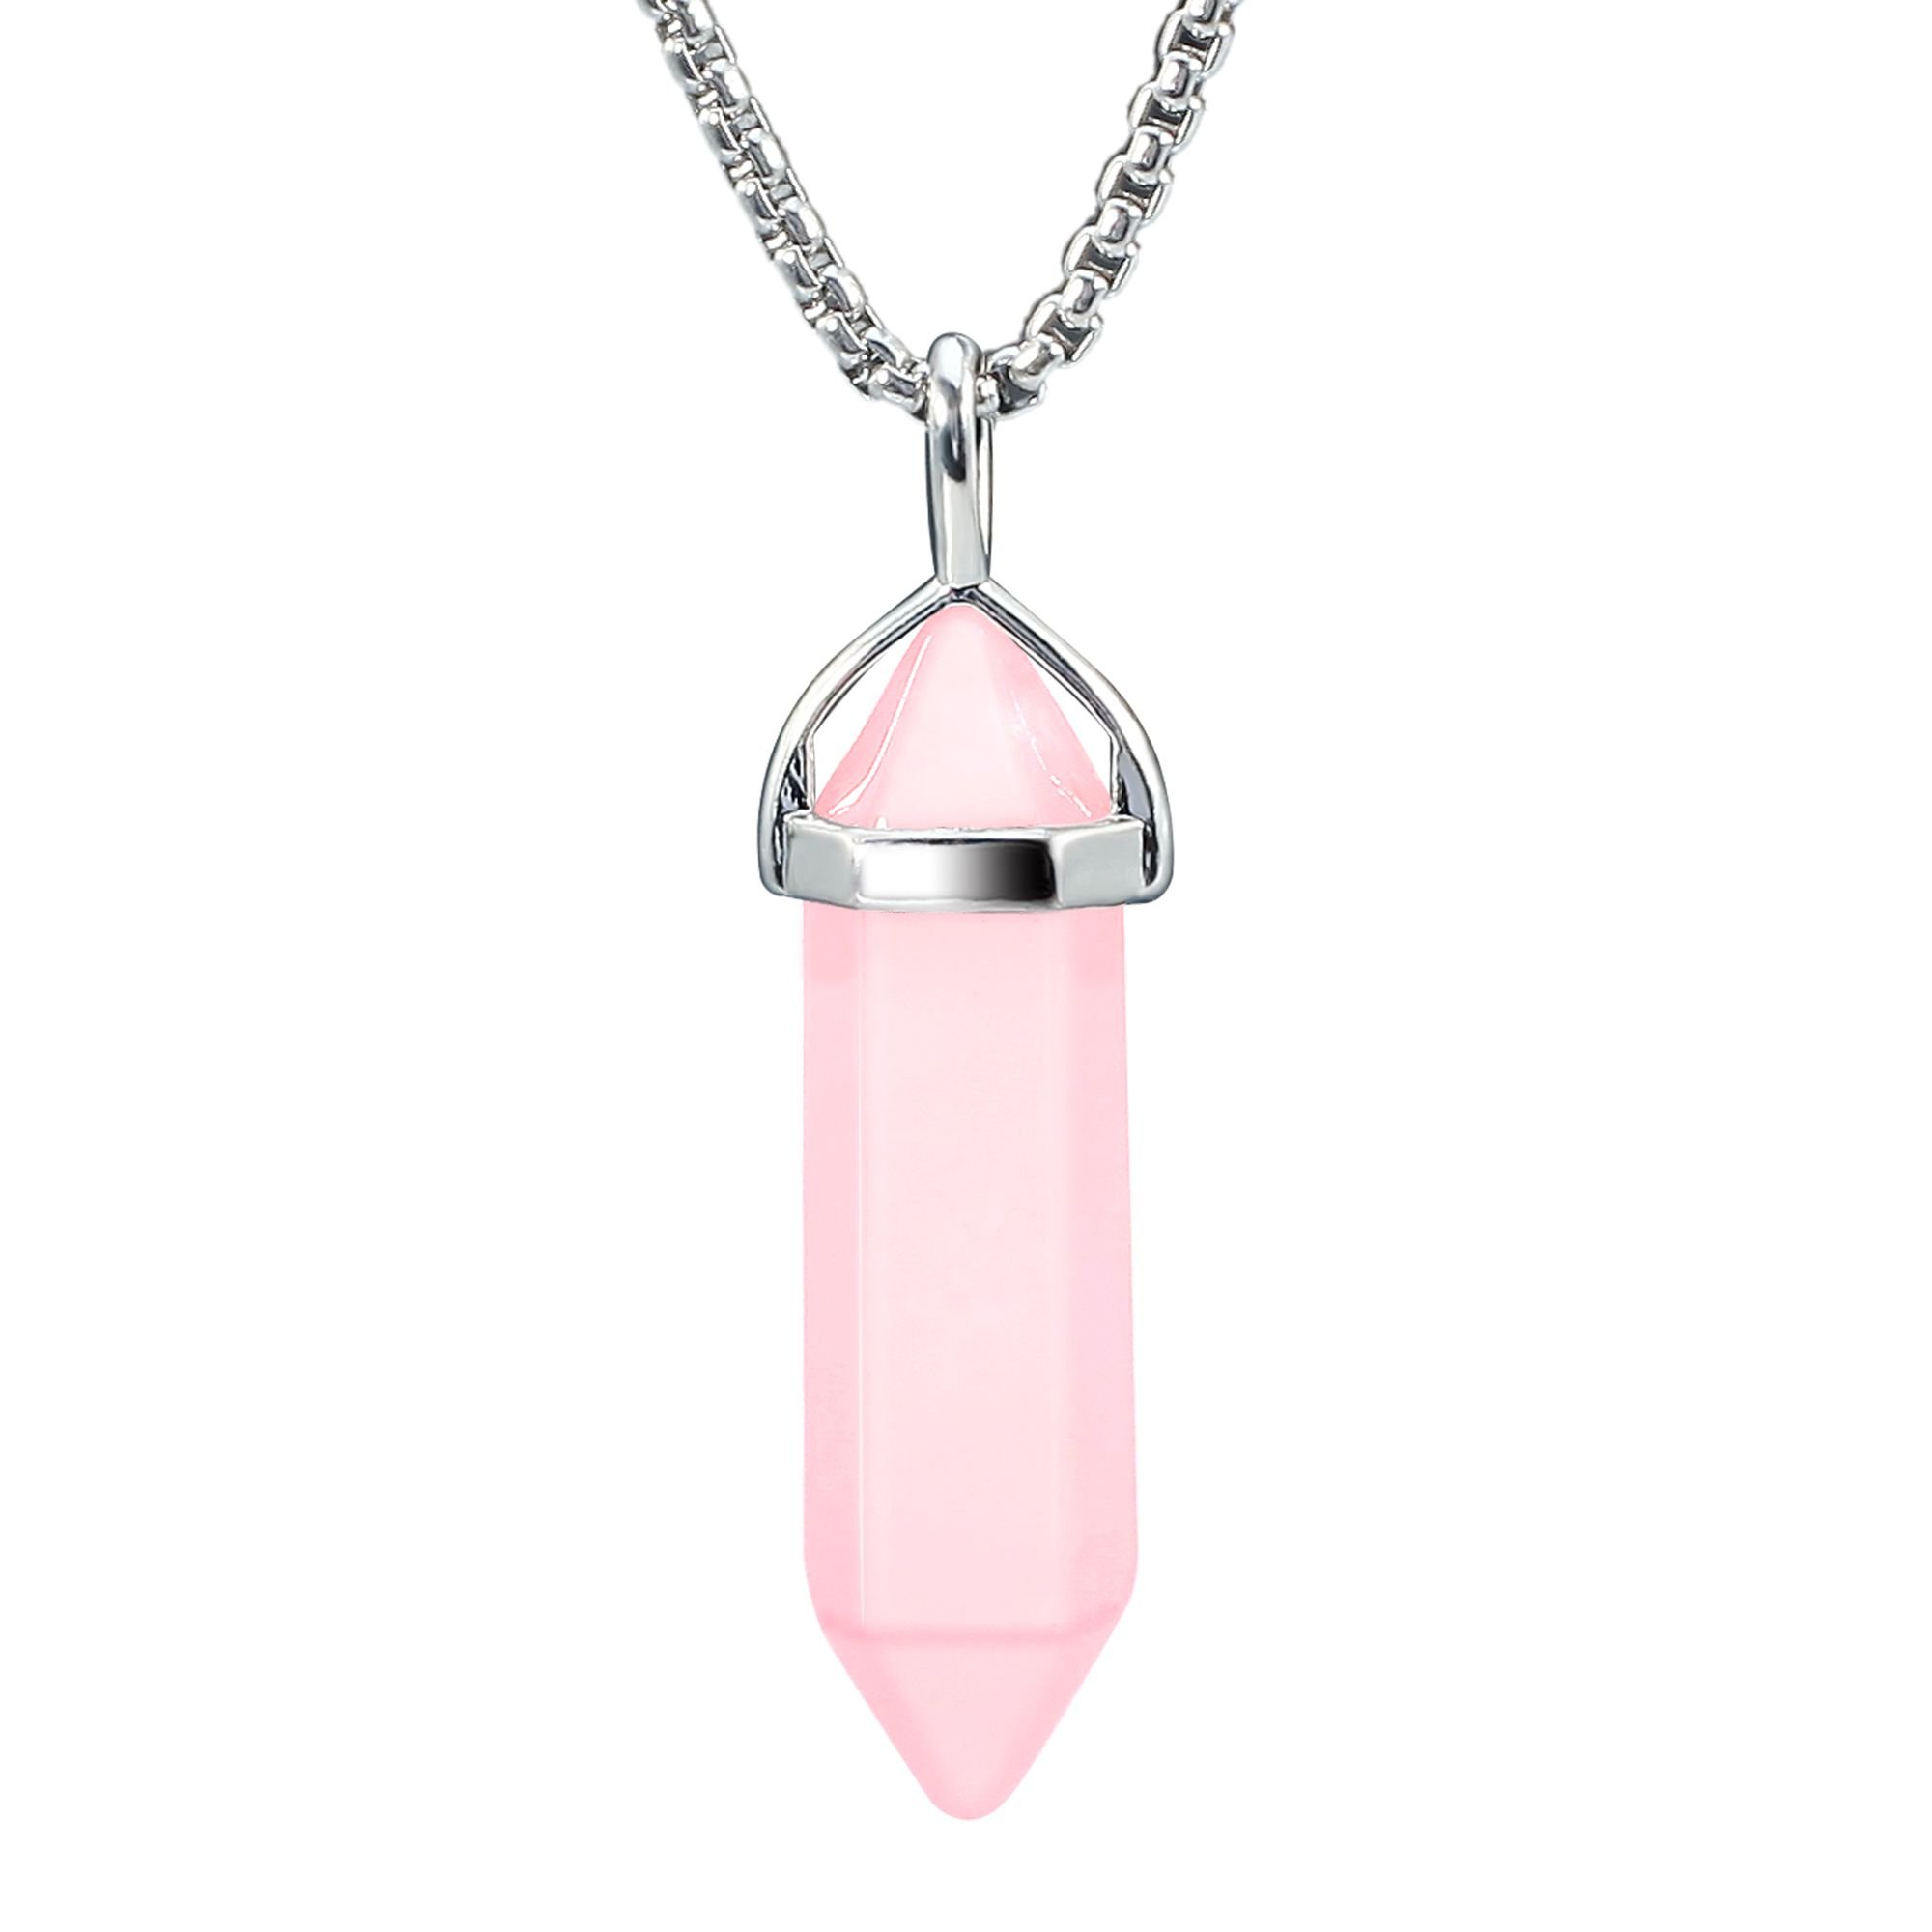 YANCHUN Healing Crystal Necklaces Rose Quartz Necklace Healing Amethyst Necklace for Women Girls 